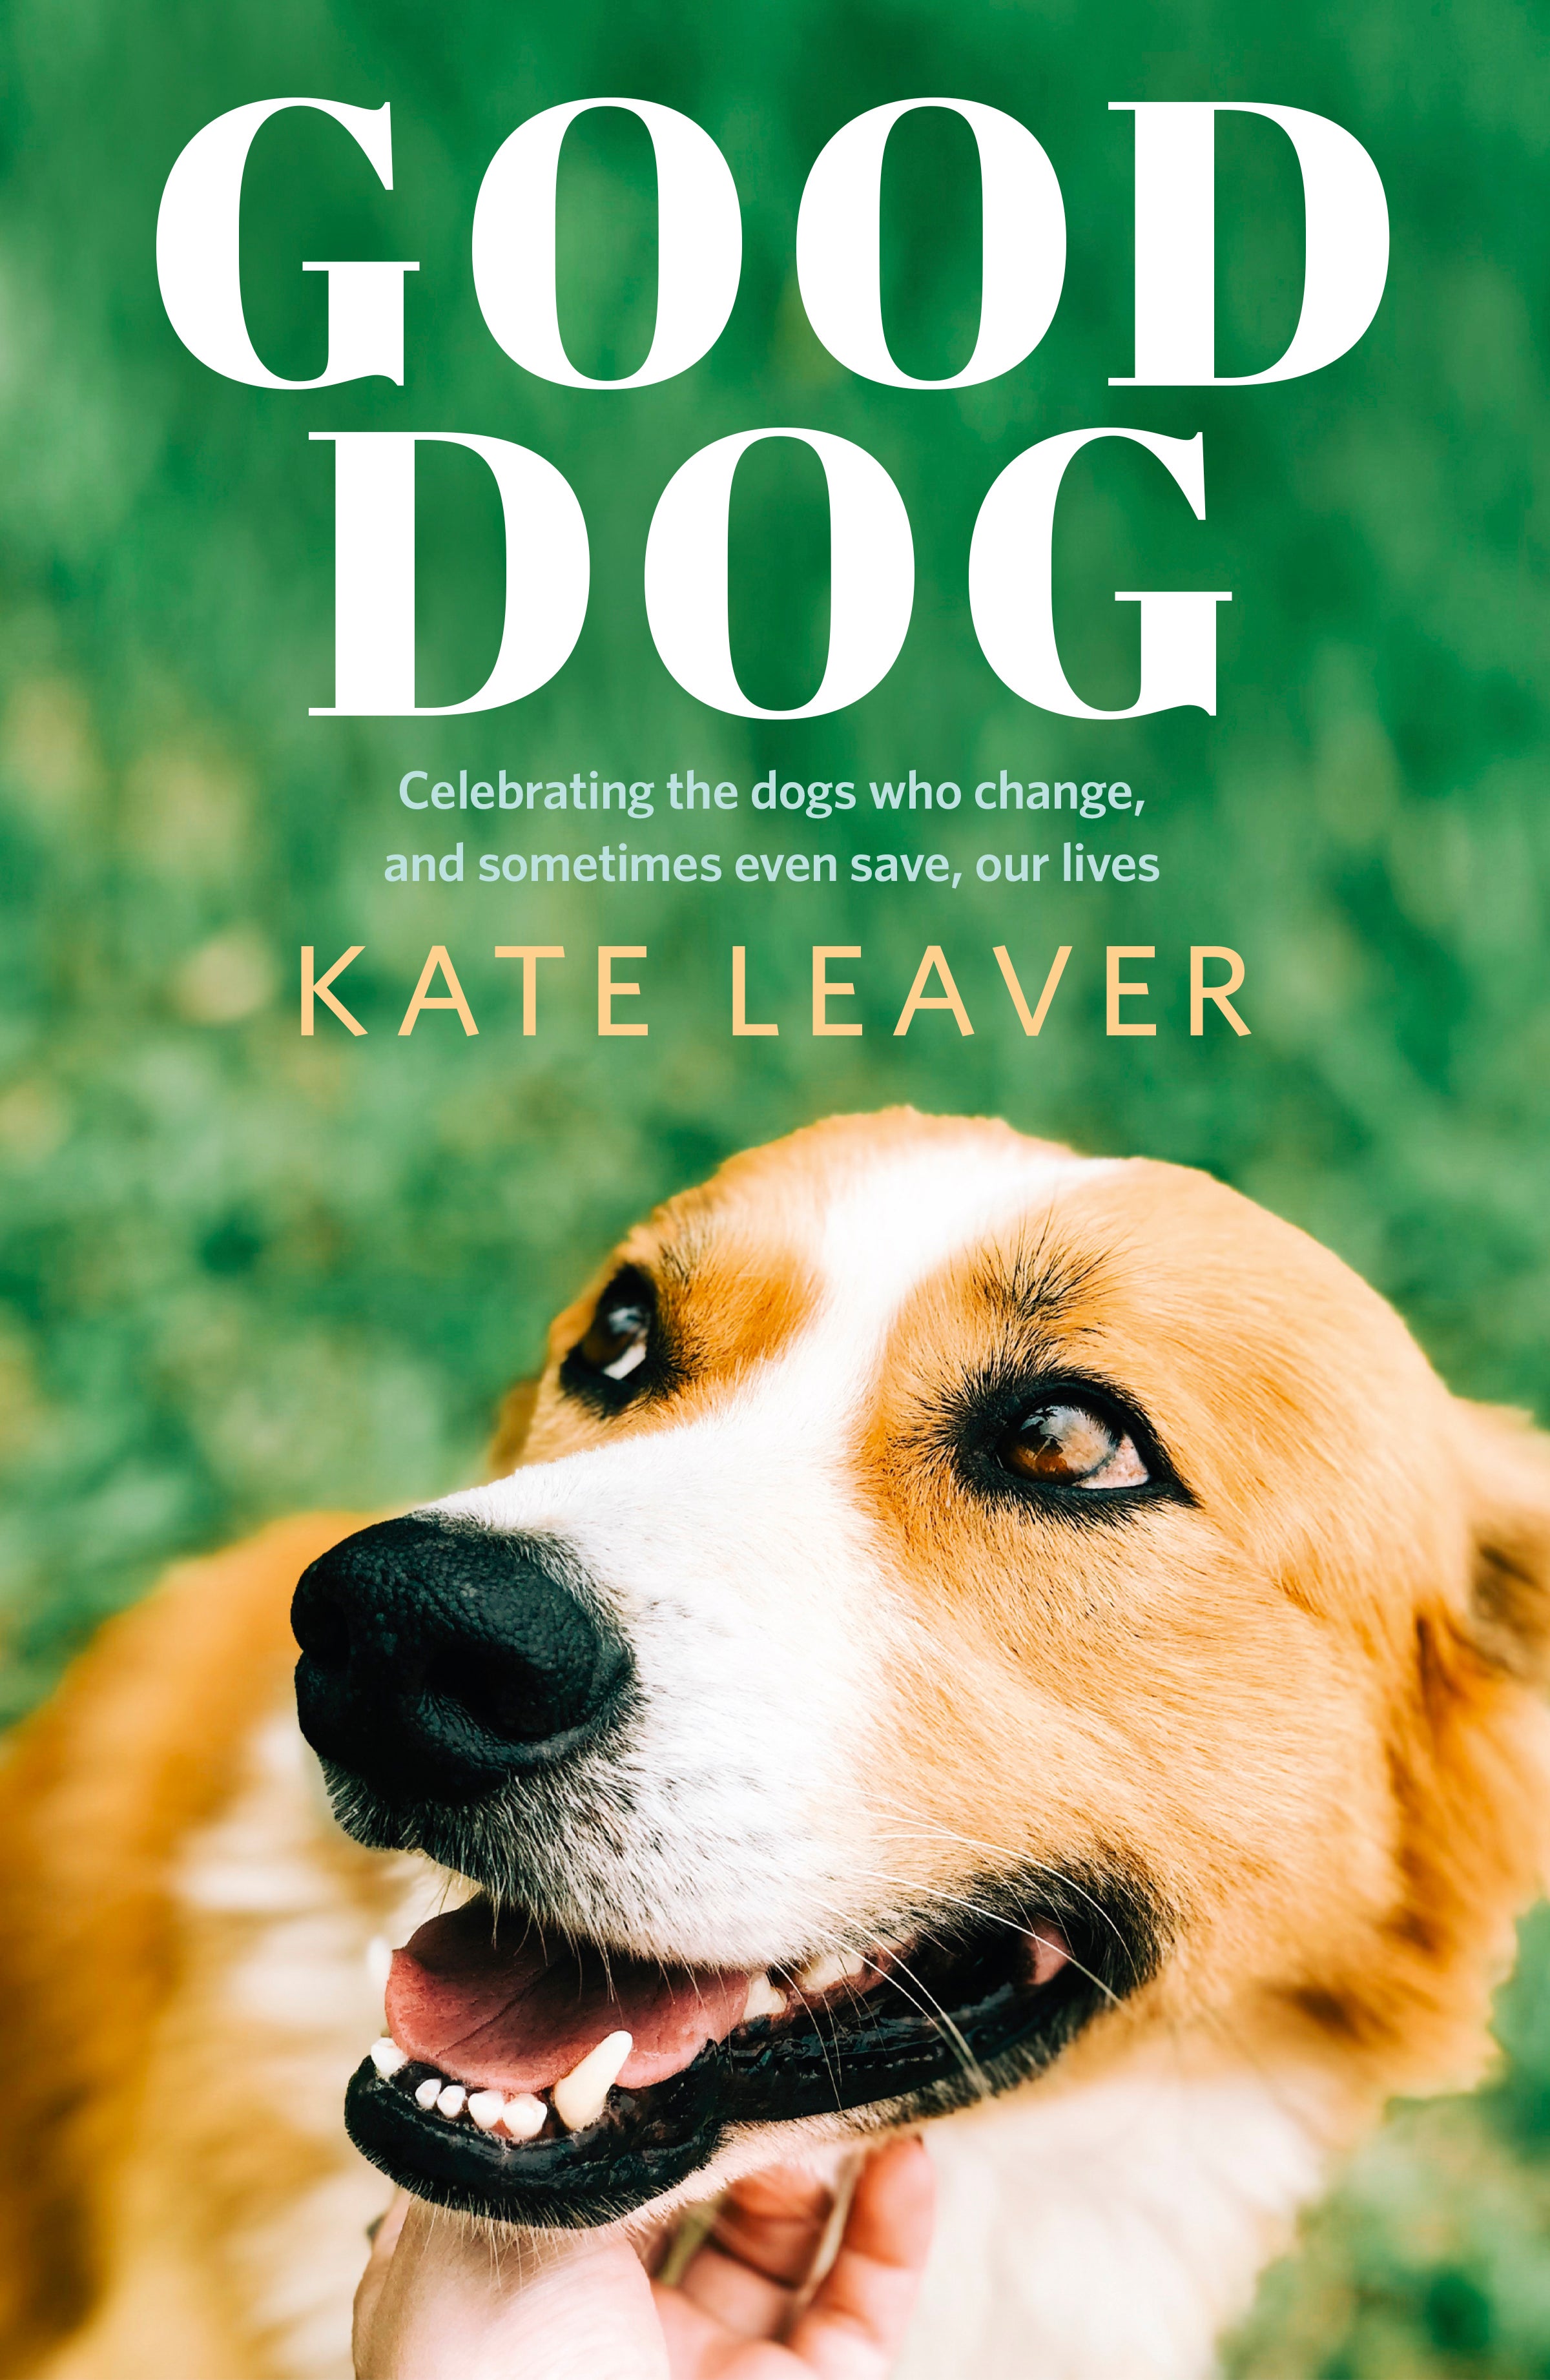 Good Dog book cover(HarperCollins/PA)